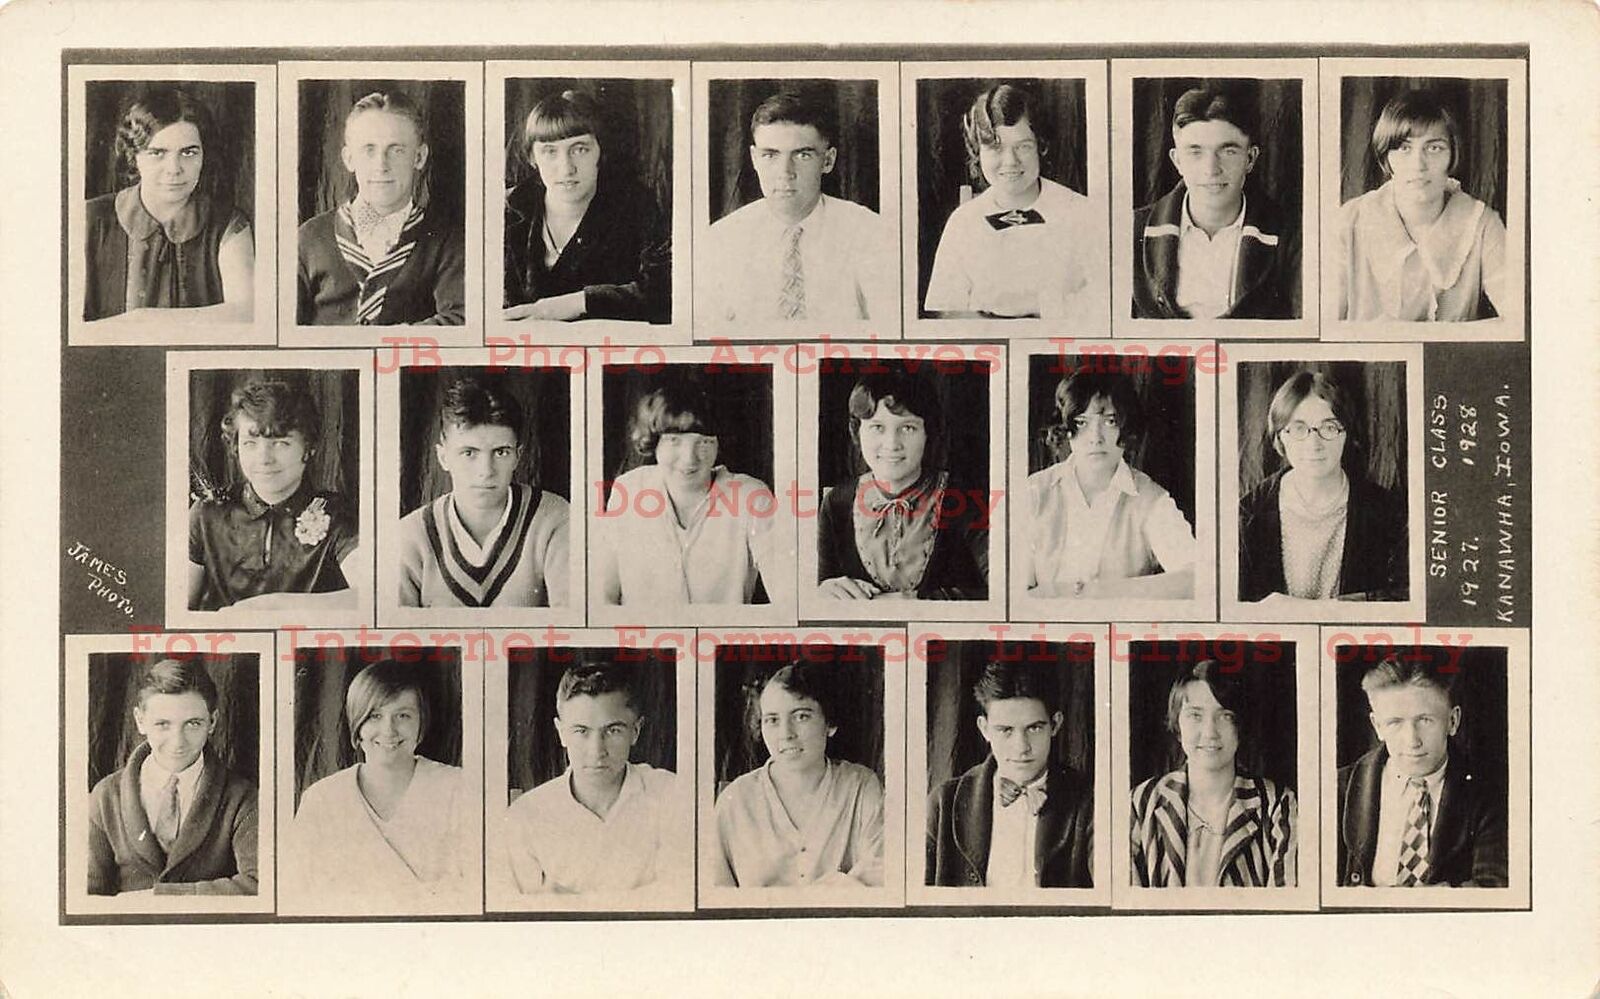 IA, Kanawha, Iowa, RPPC, 1927-1928 High School Senior Class, James Photo